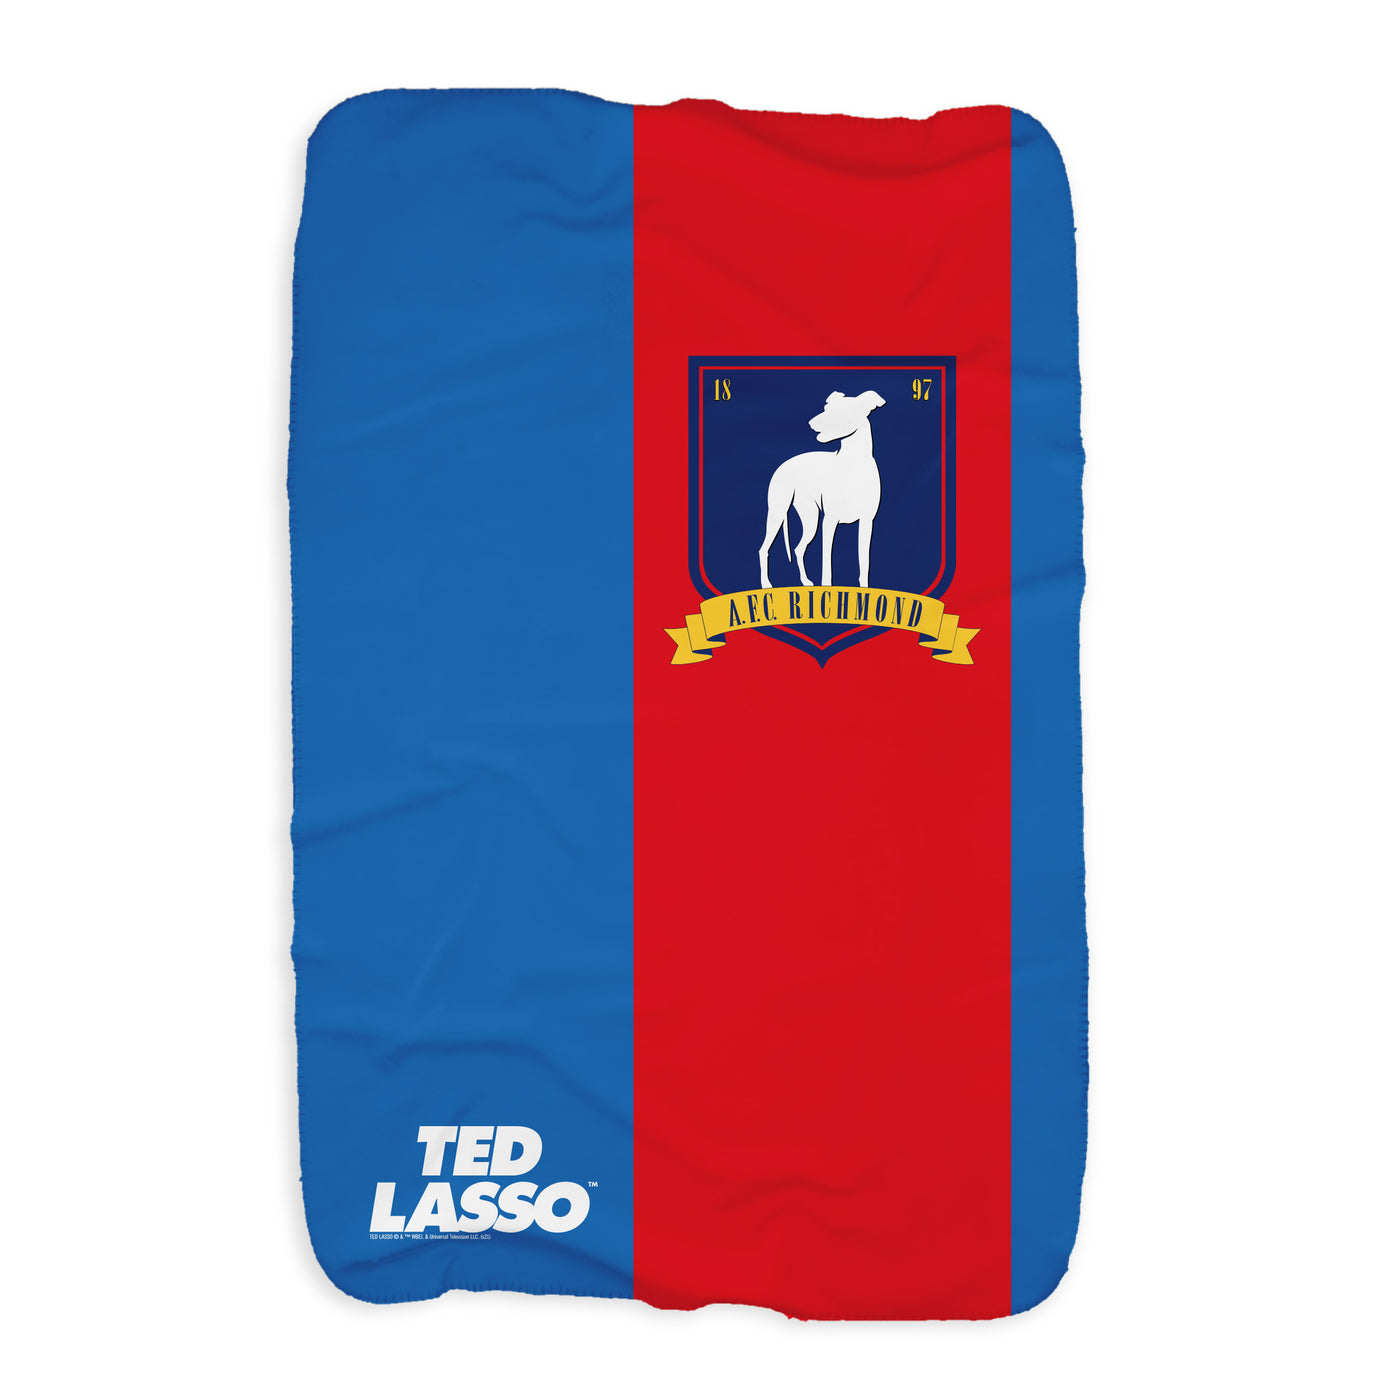 Ted Lasso A.F.C. Richmond Crest Striped Fleece Blanket